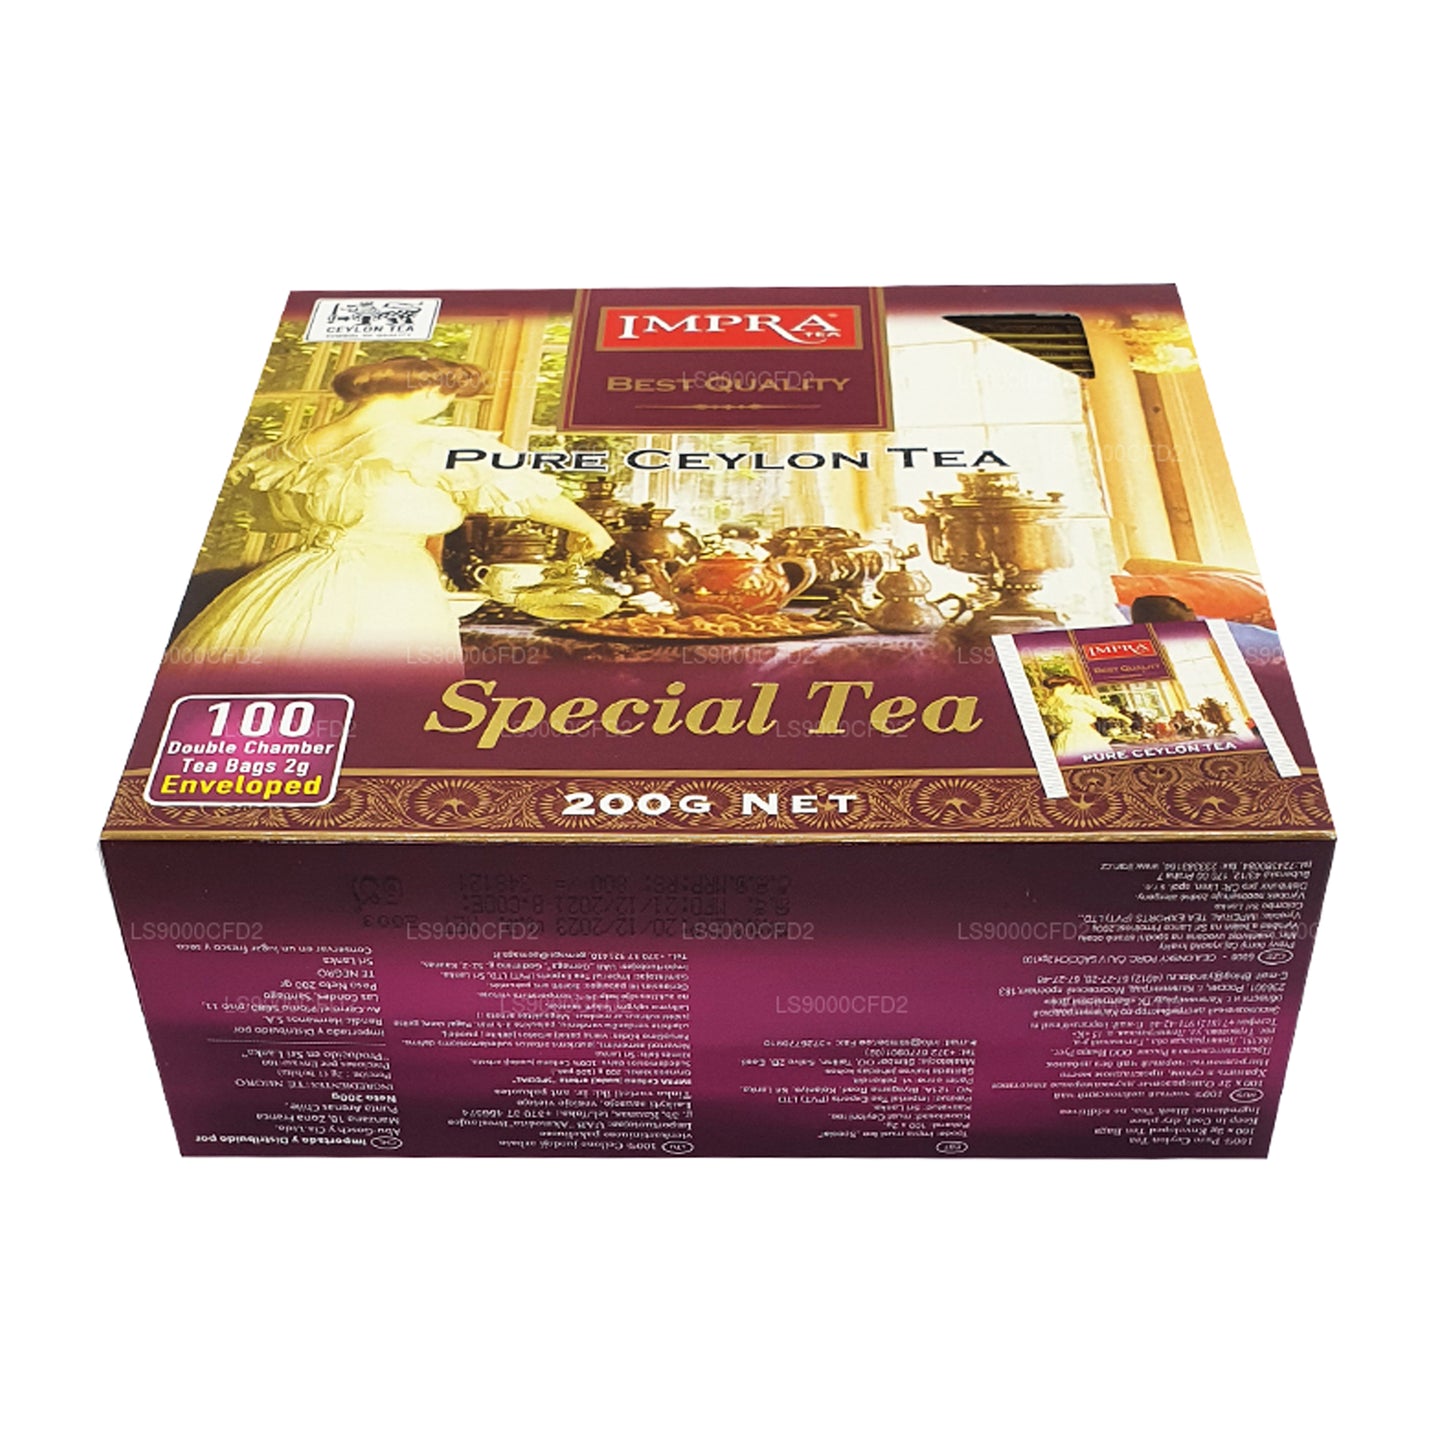 Impra Pure Ceylon specialte (200g)